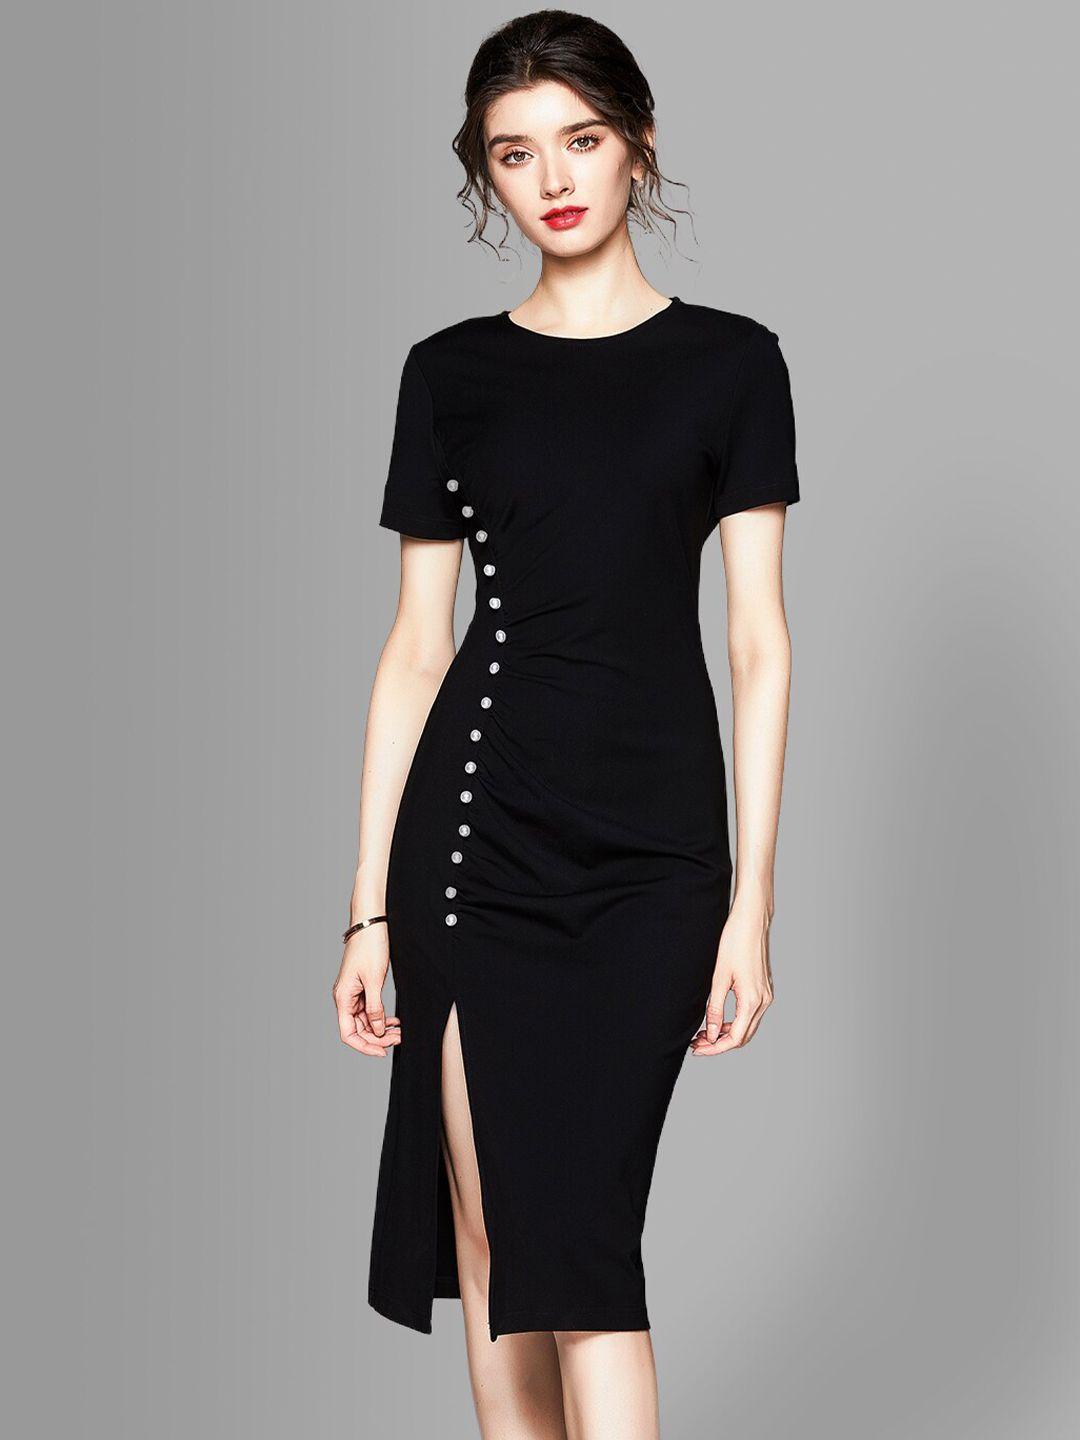 jc collection black solid sheath dress